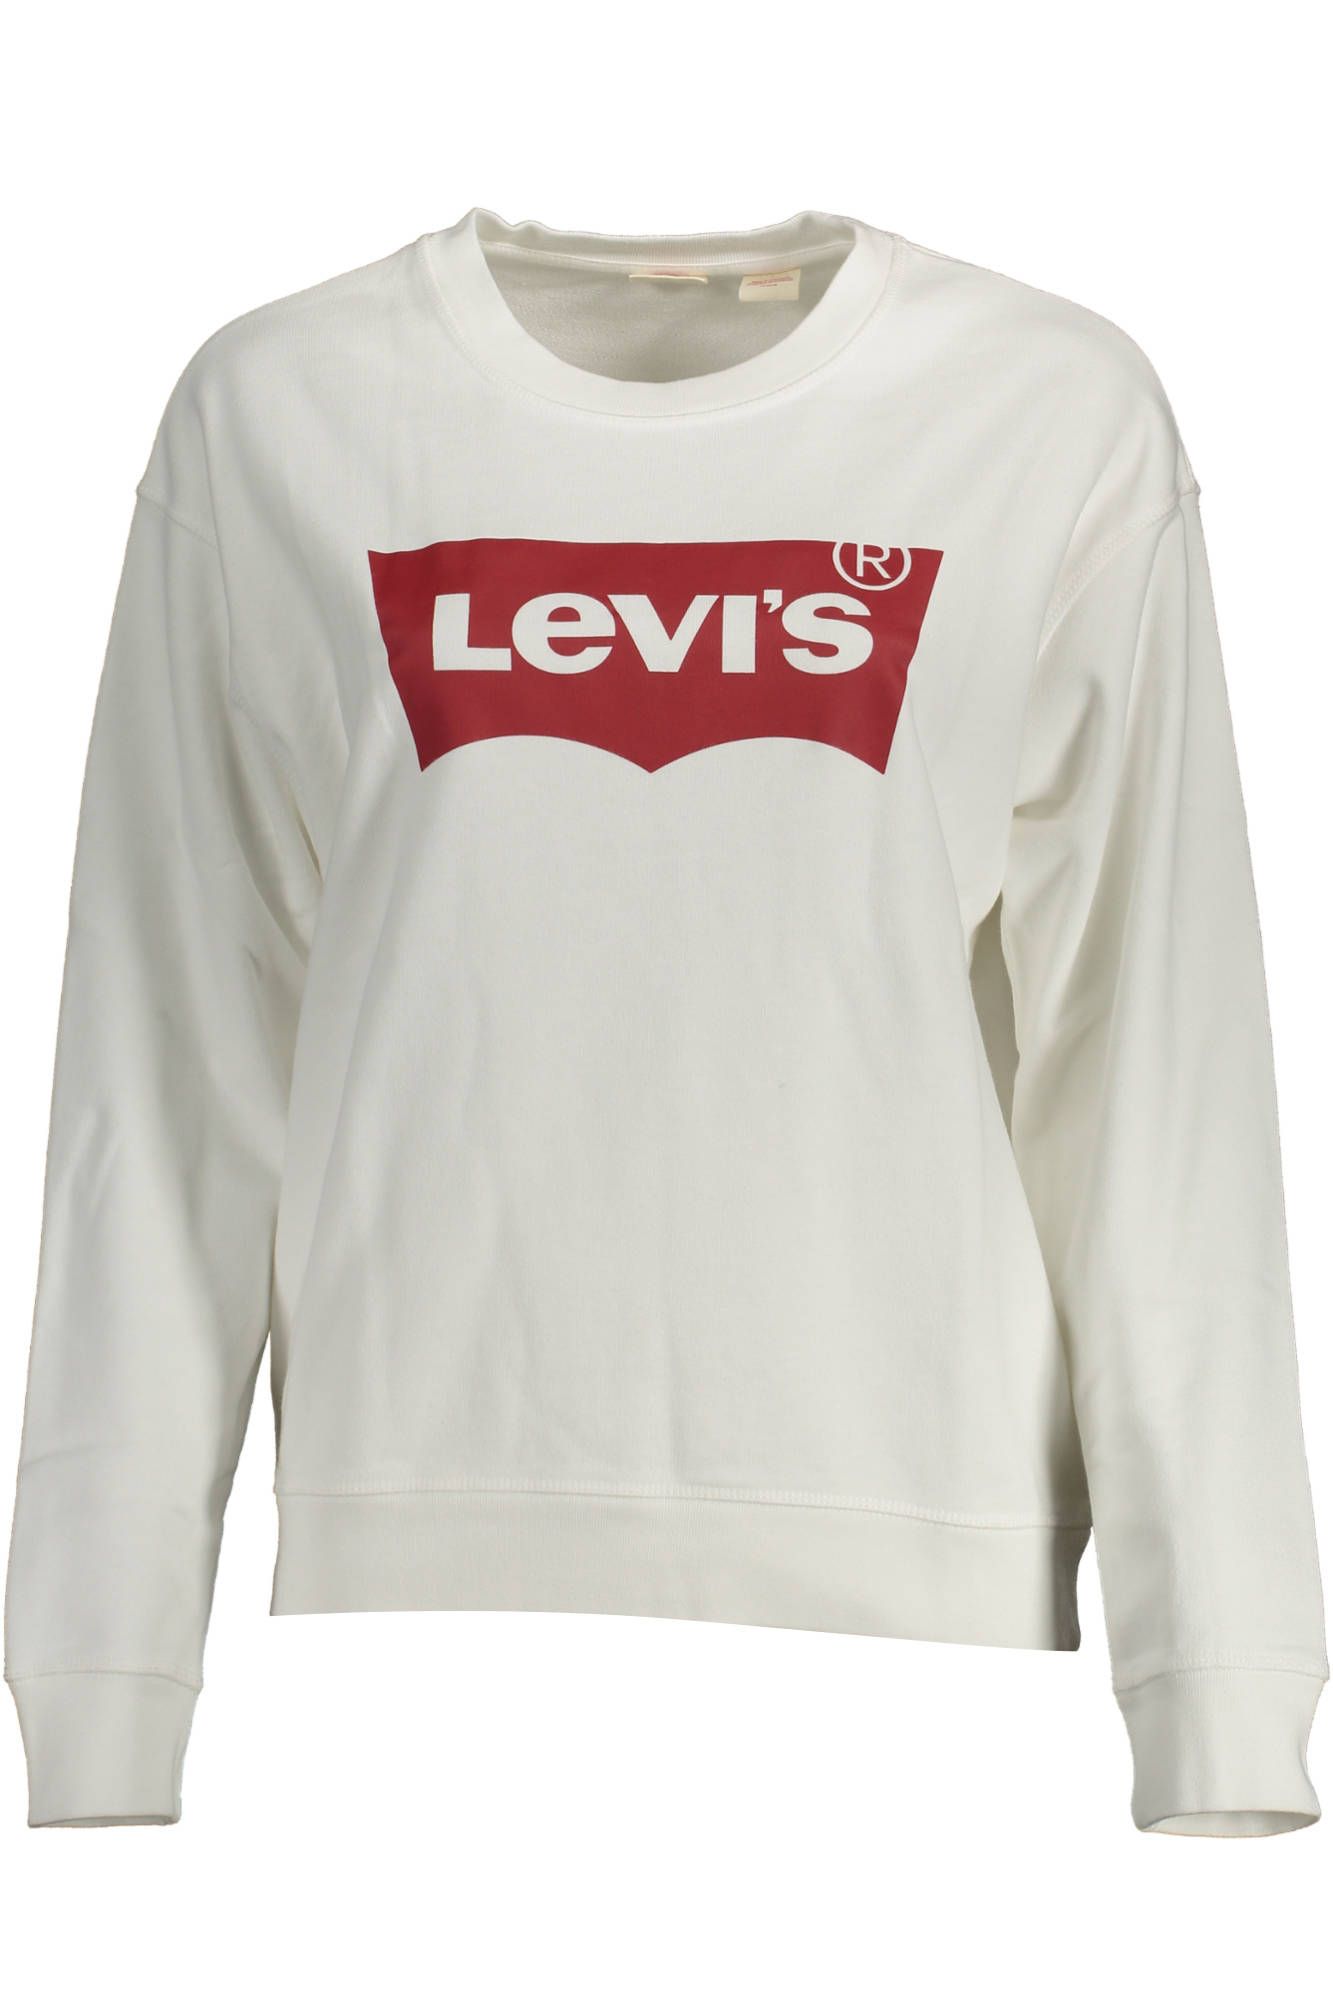 Levi's Chic Cotton Logo Women's Sweatshirt In White